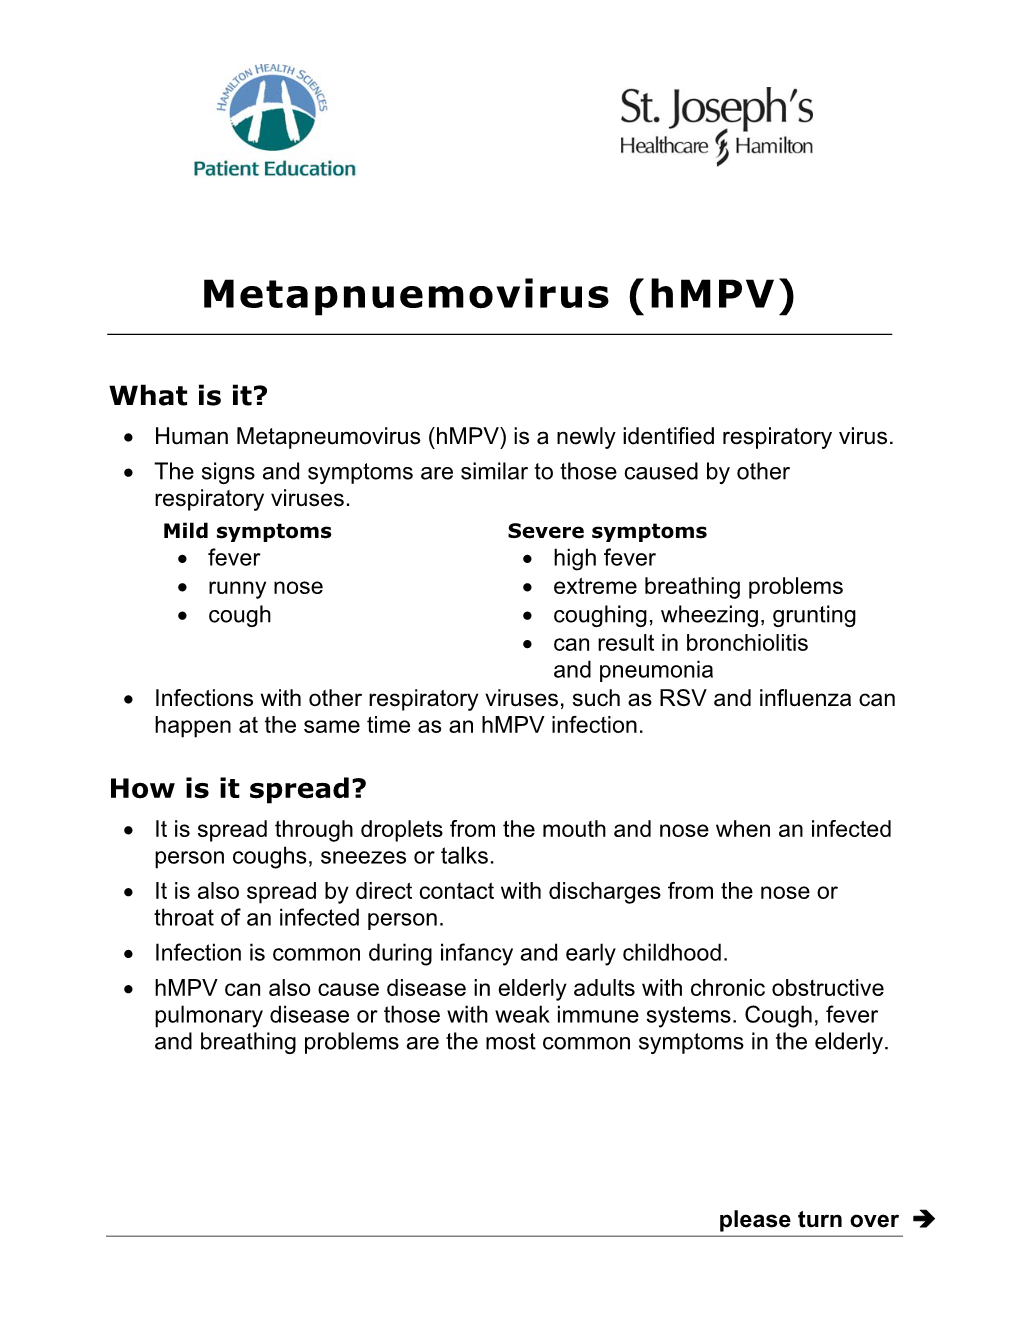 Human Metapneumovirus (Hmpv) Is a Newly Identified Respiratory Virus